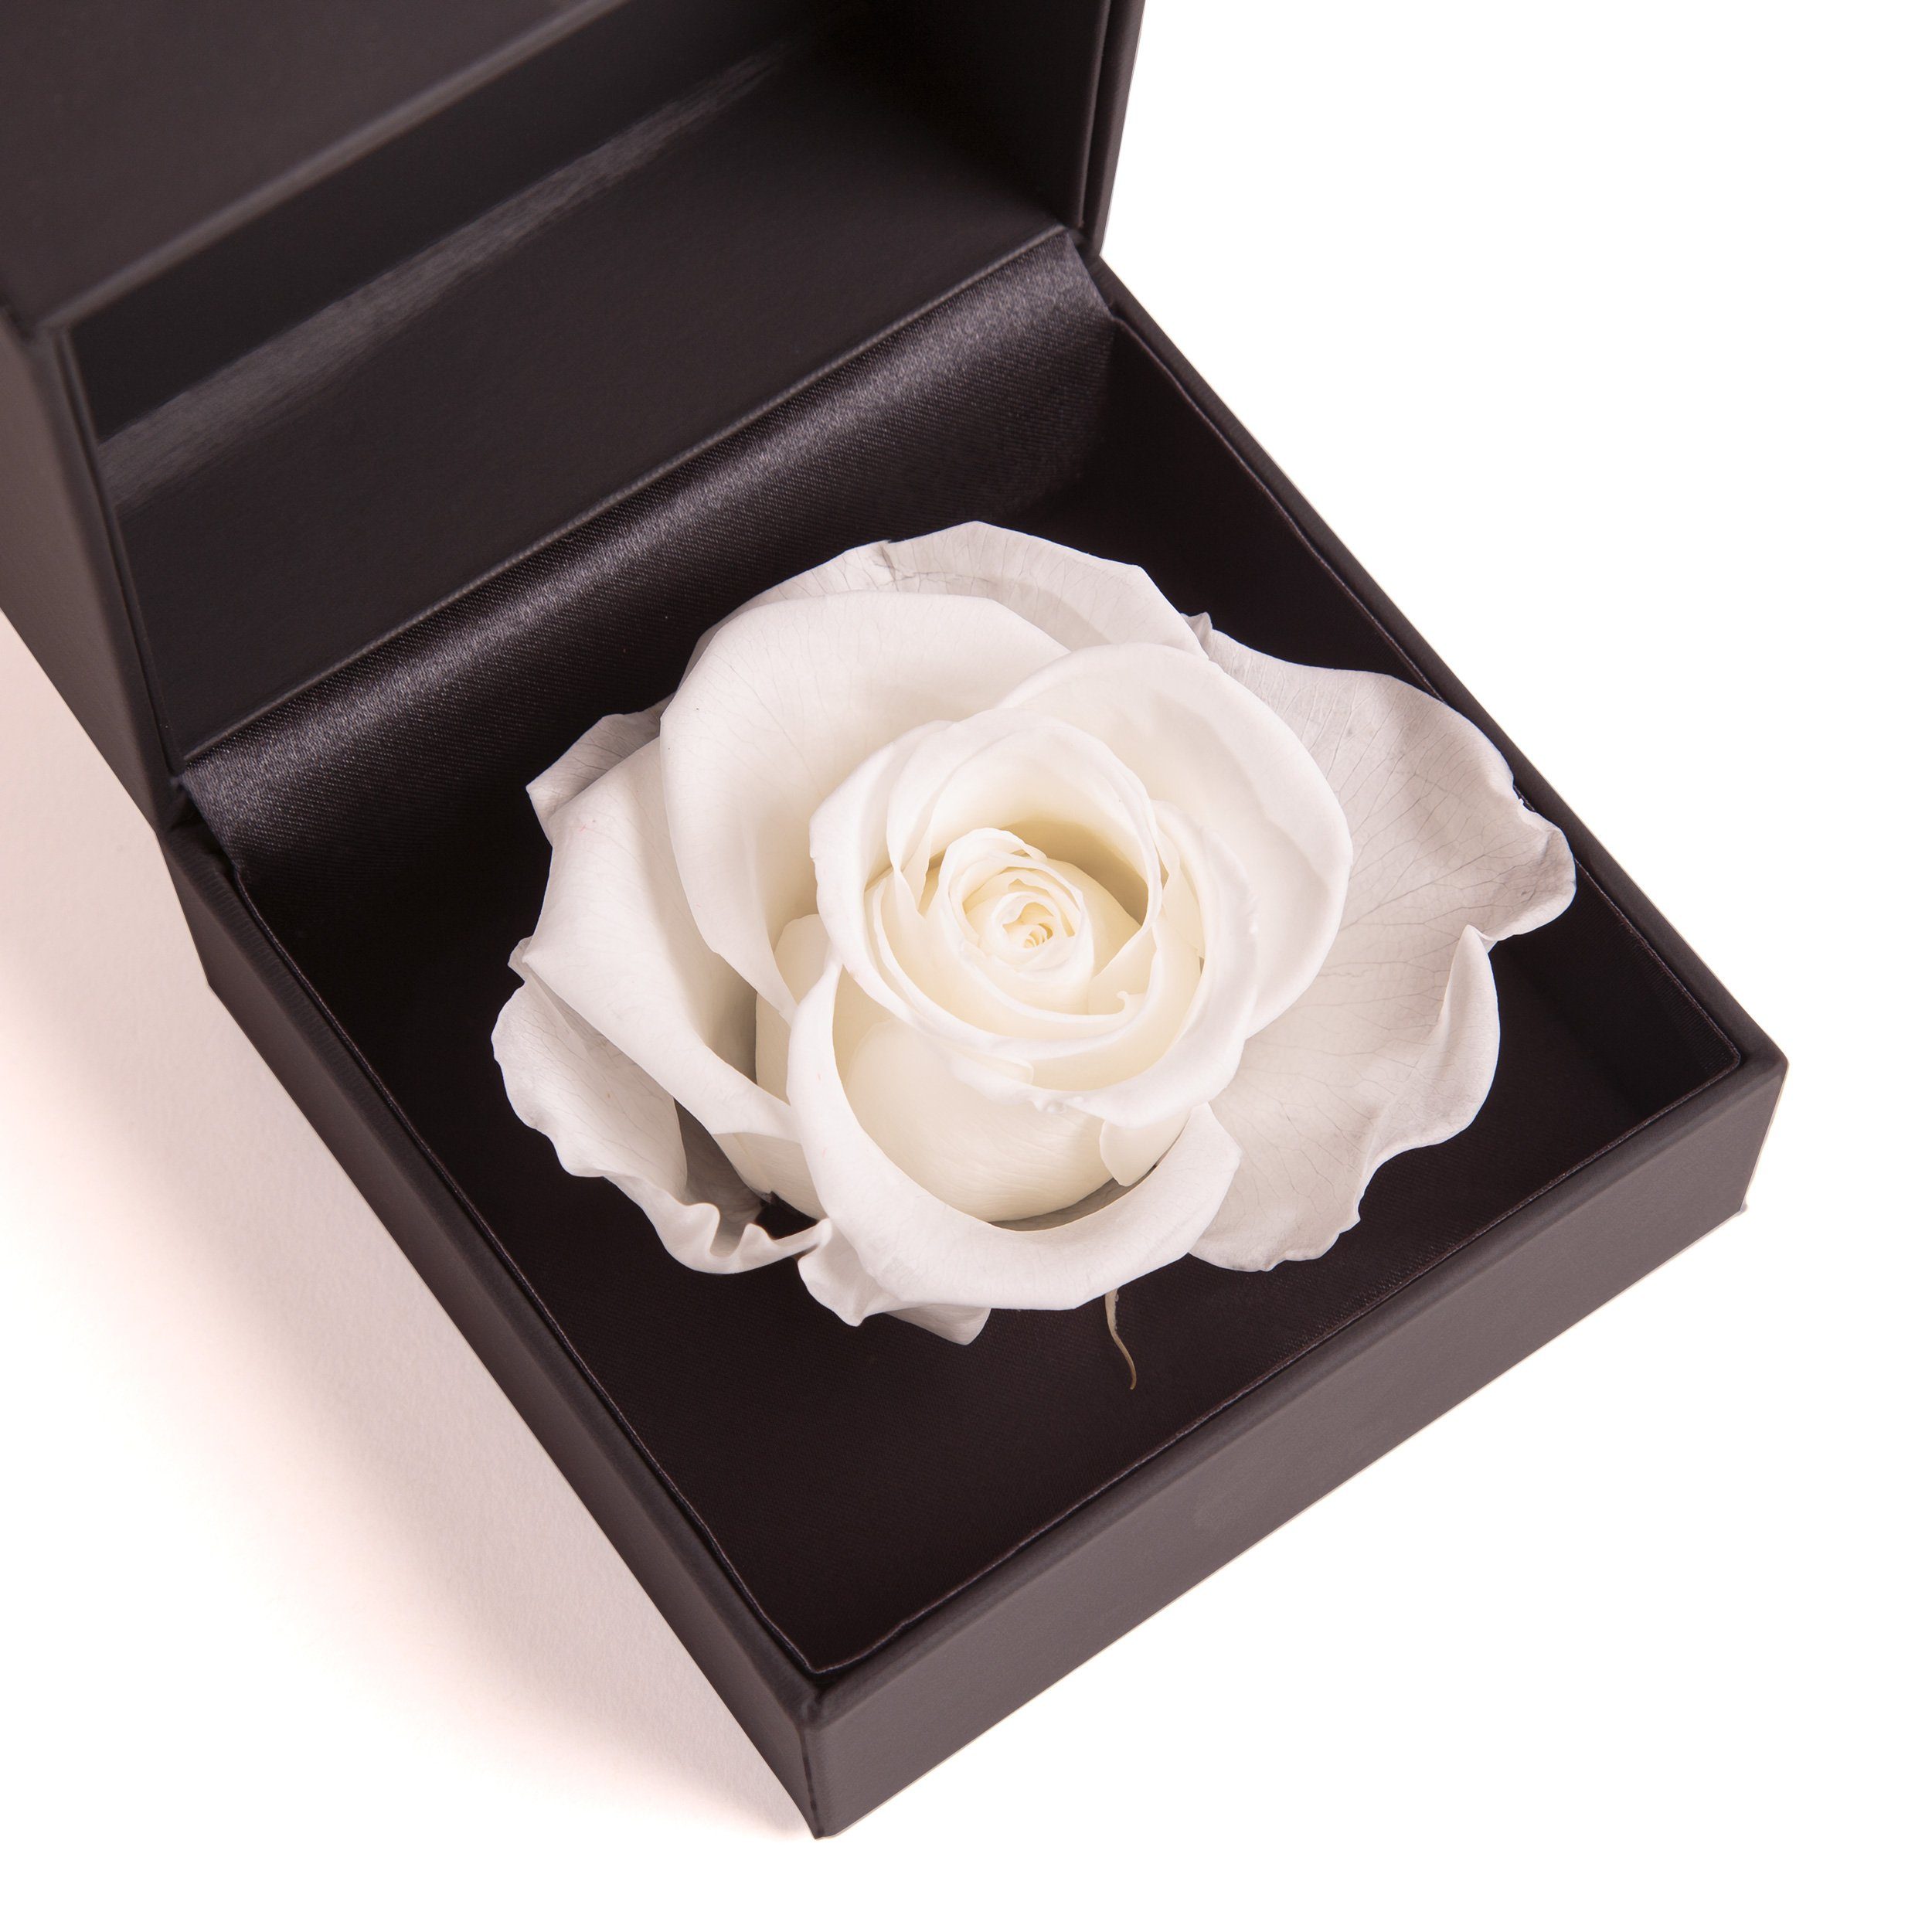 Höhe Ringbox 9 Groß SCHULZ Kunstblume cm, Ringdose Box Langlebige Infinity Heidelberg, Rose konserviert Weiß in Rose Rose, ROSEMARIE Rosenbox